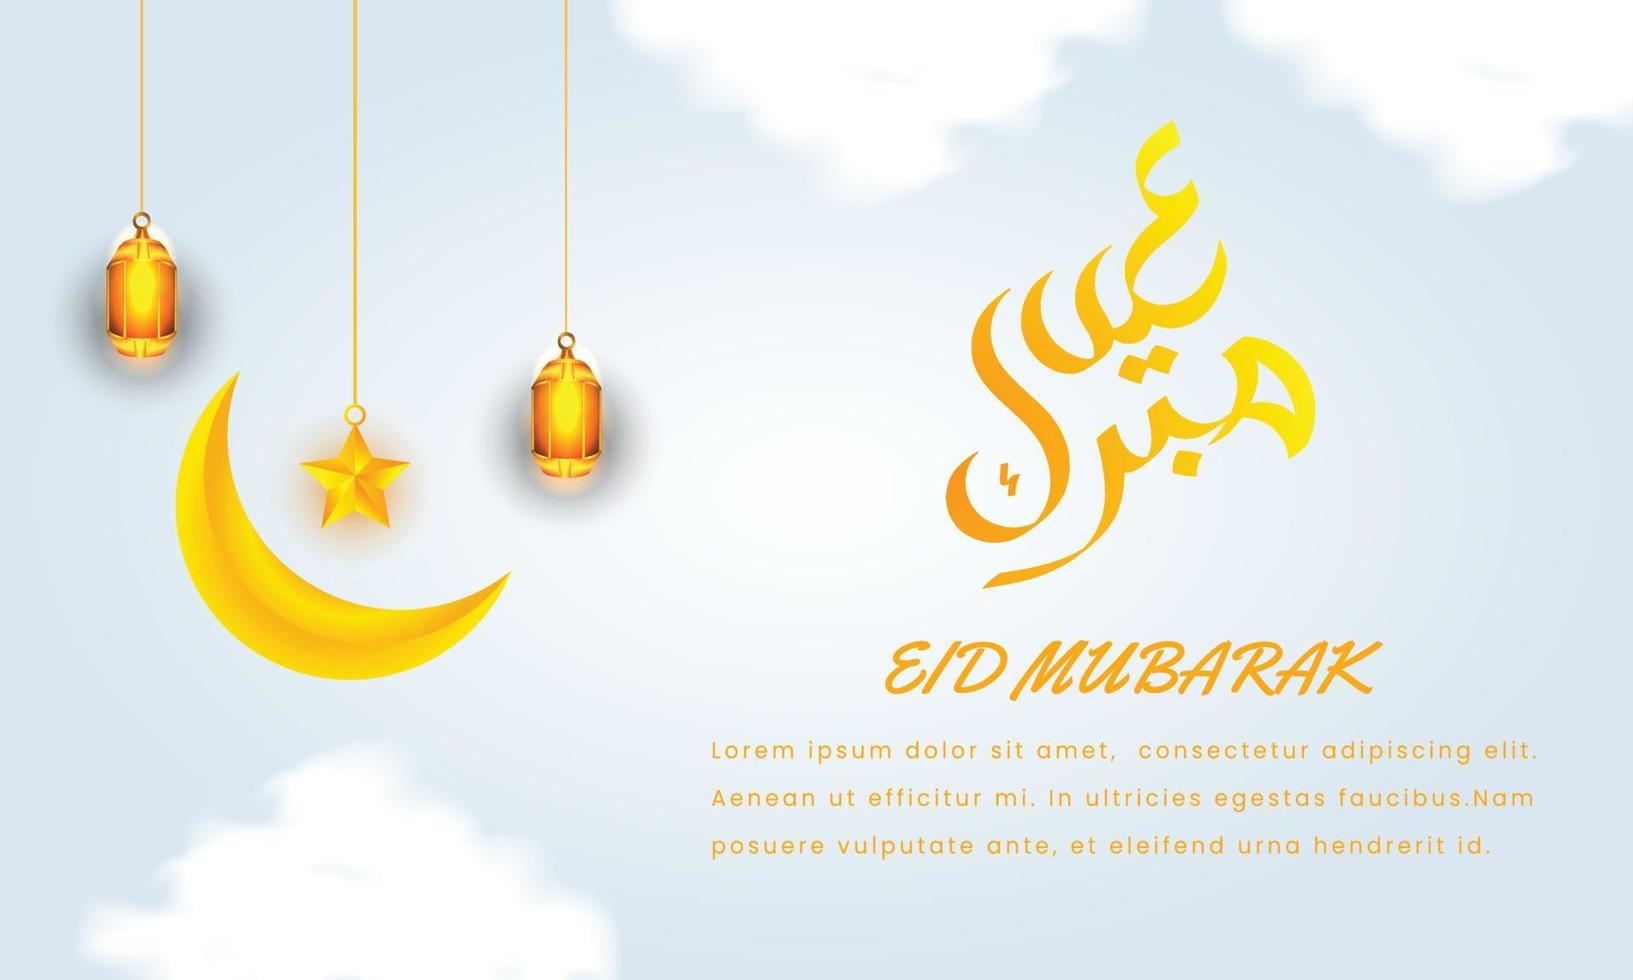 Eid mubarak greetings muslim islamic festival background design with arabic caligraphy, crescent moon, star, lanterns, clouds vector